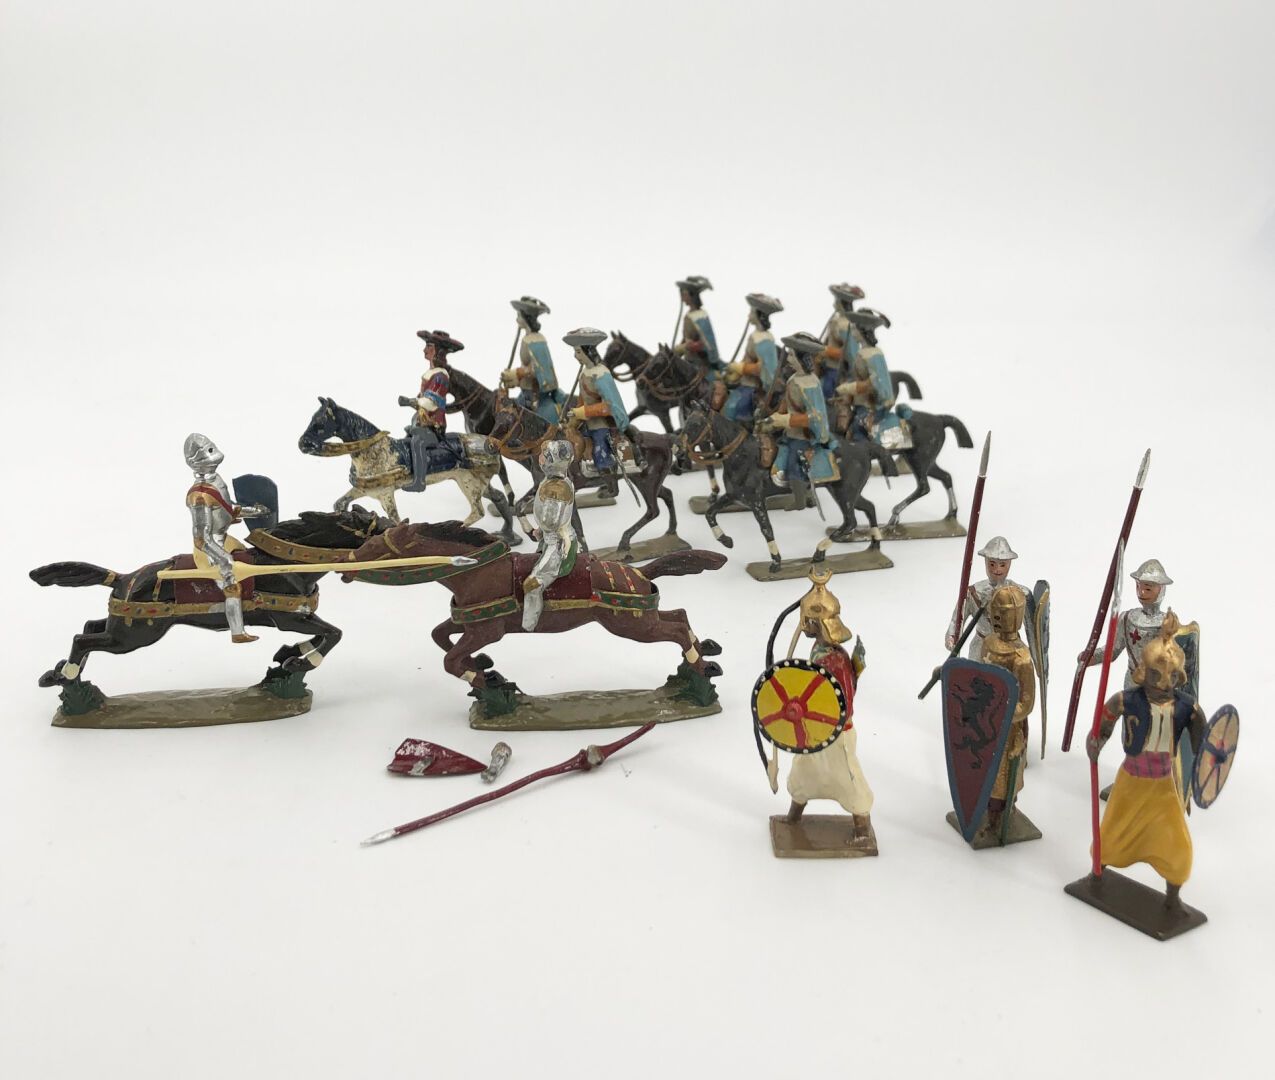 Null Ronde Bosse - CBG：路易十四和六个骑马的火枪手。法国 17世纪。

锦标赛骑士--十字军和亚述人。法国 15世纪